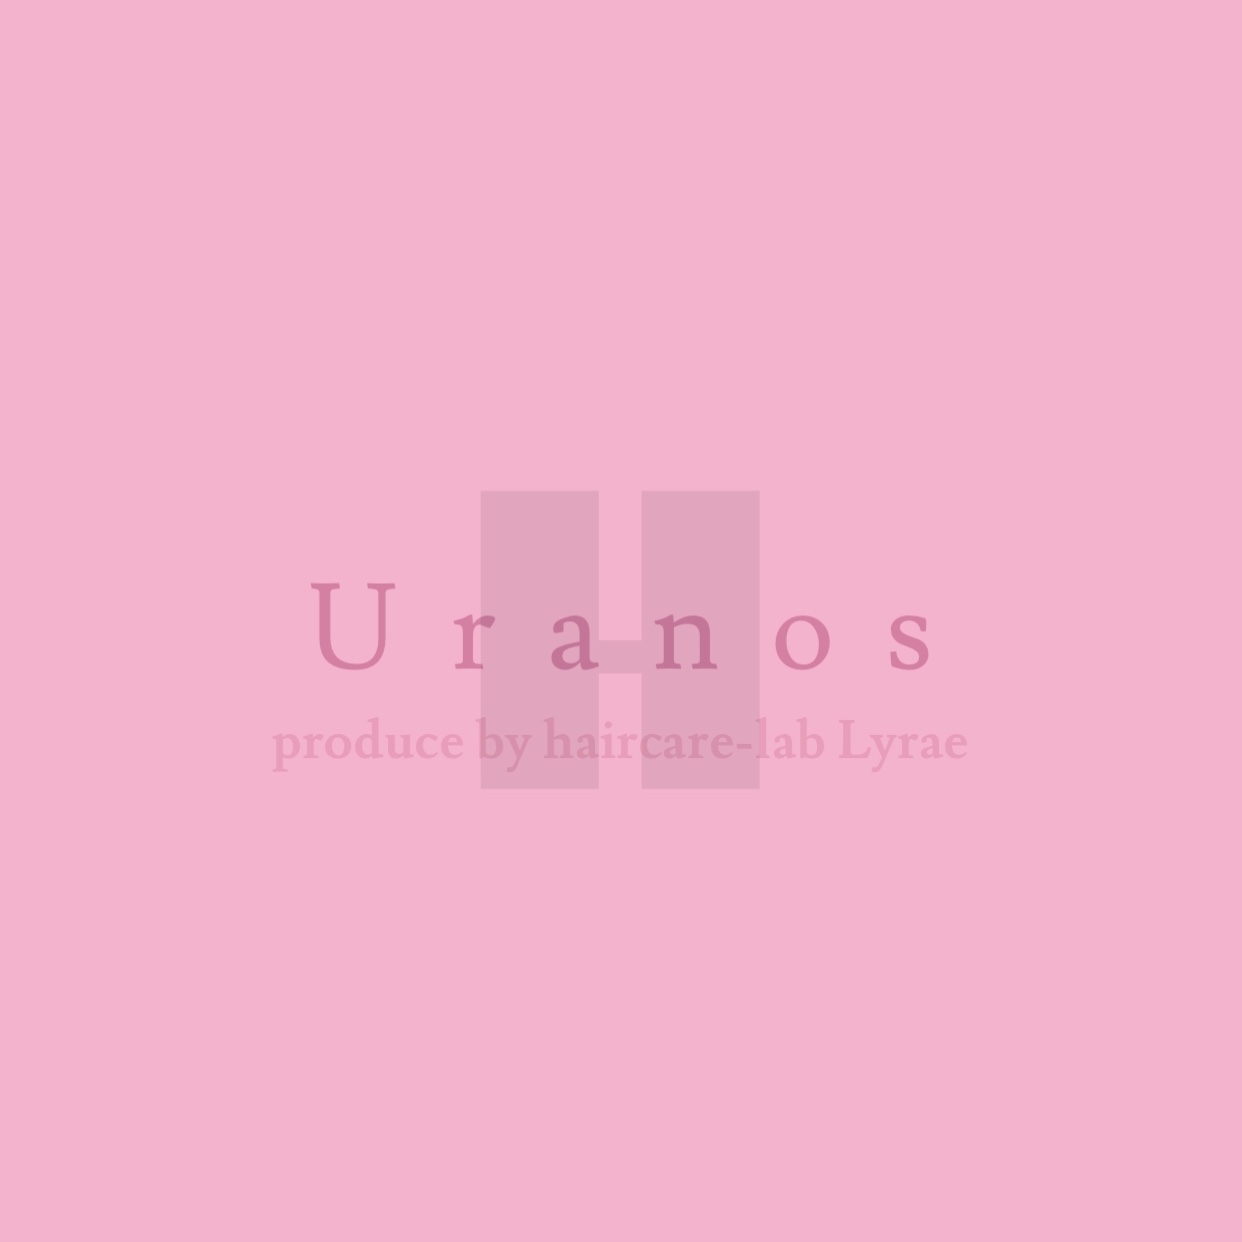 Uranos H ハード | 梅田・西梅田の美容室 ヘアケアに特化した美容室 リラエ